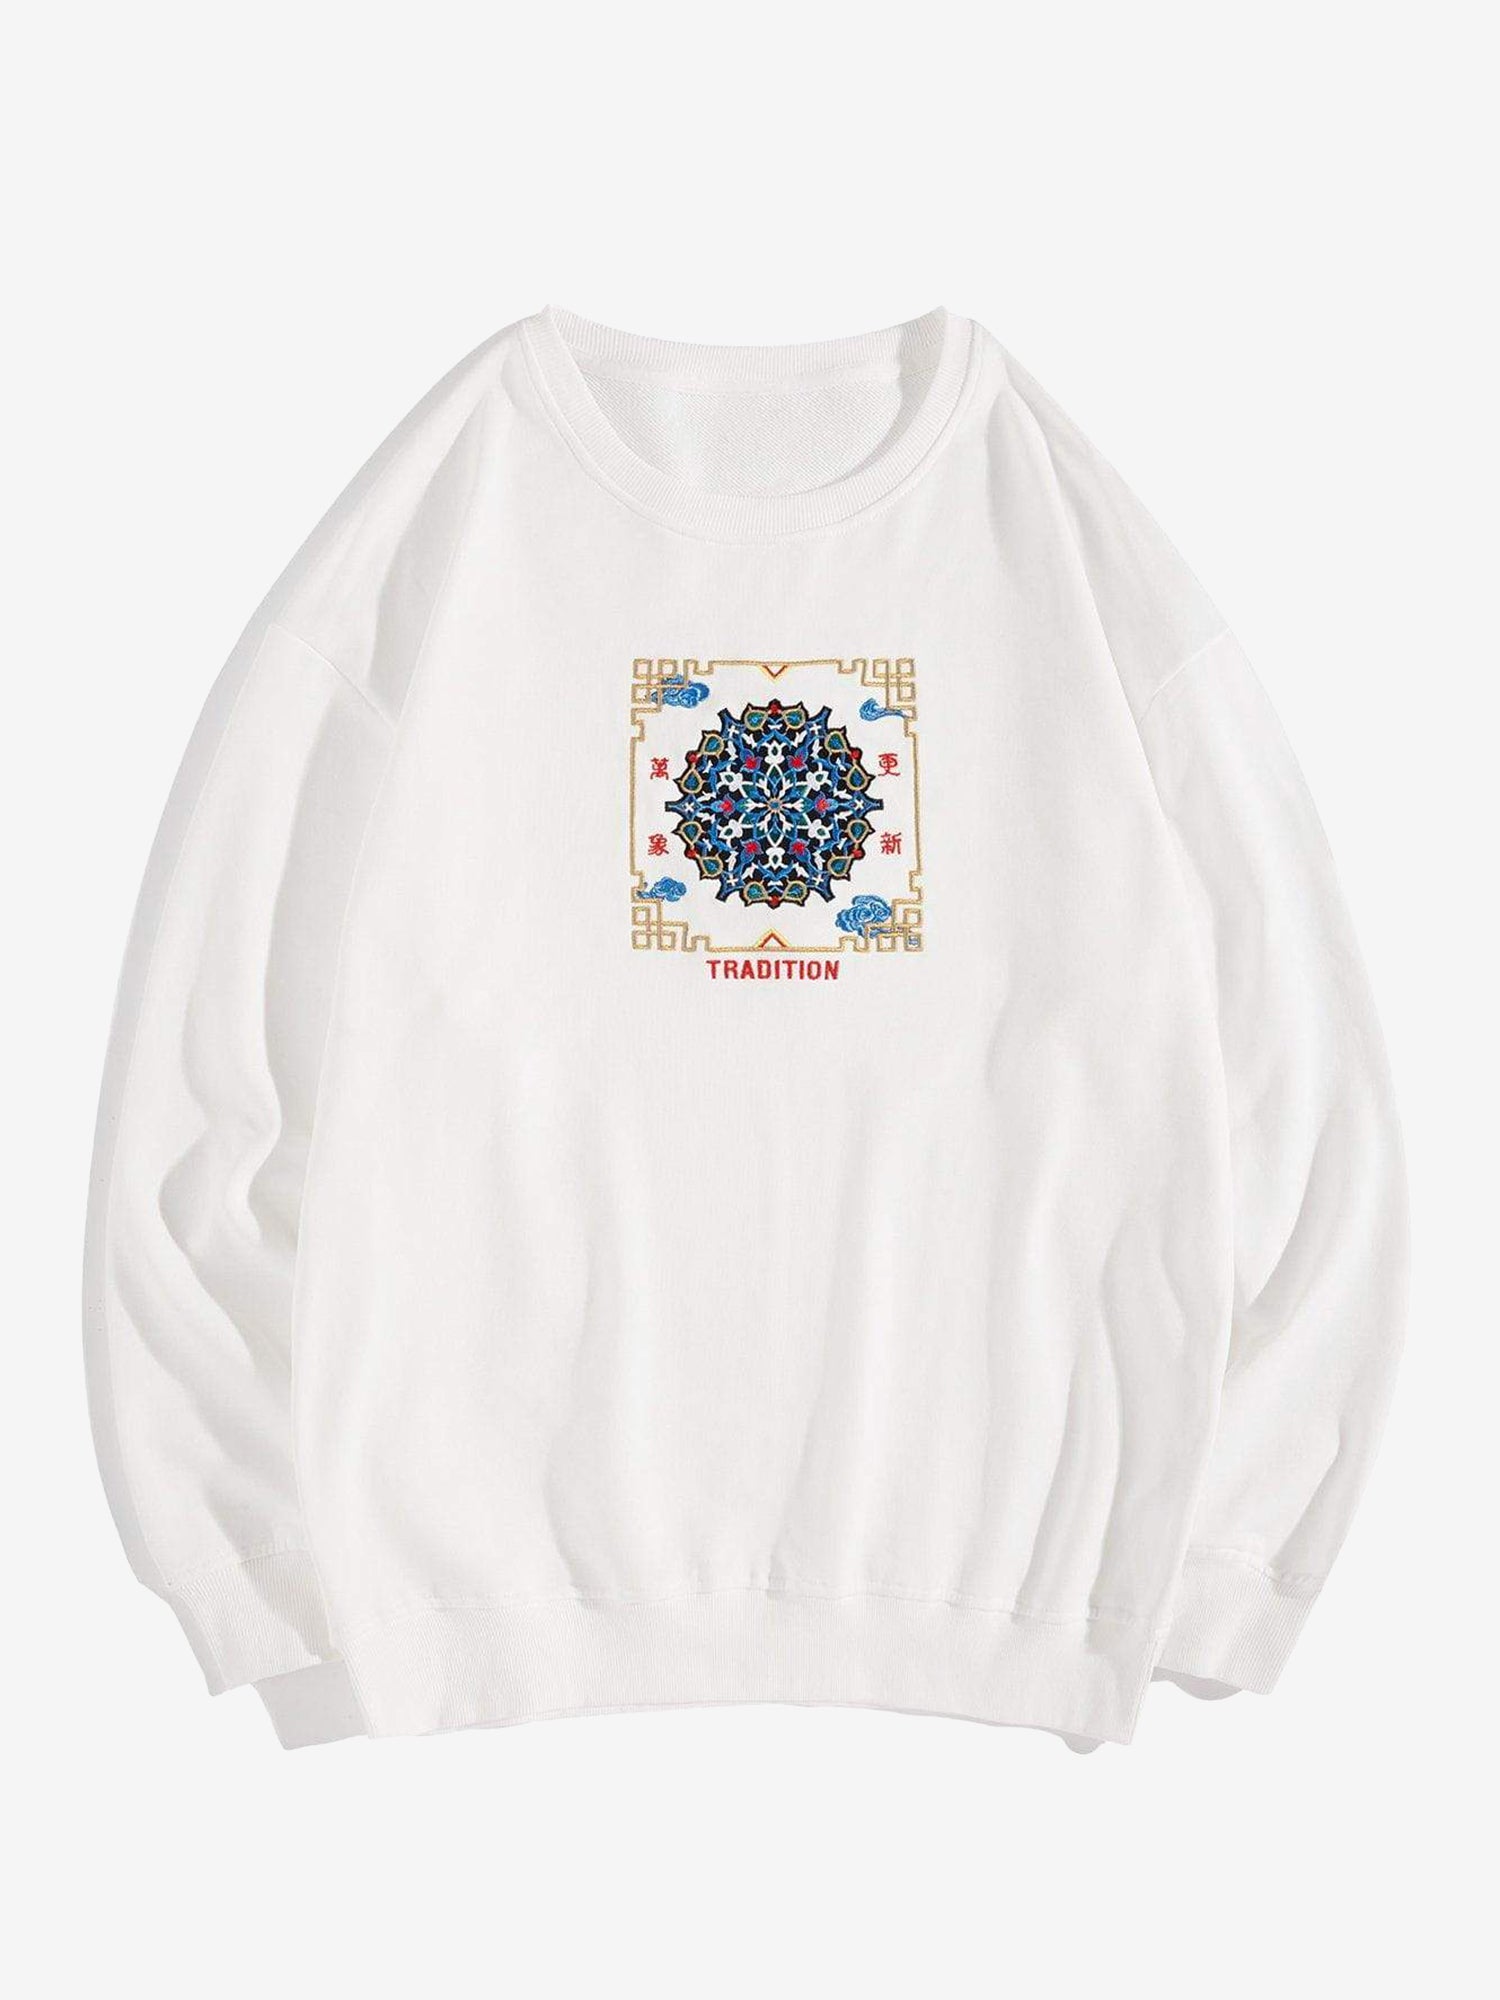 JUSTNOTAG Embroidery Chinese Kanji Sweatshirt